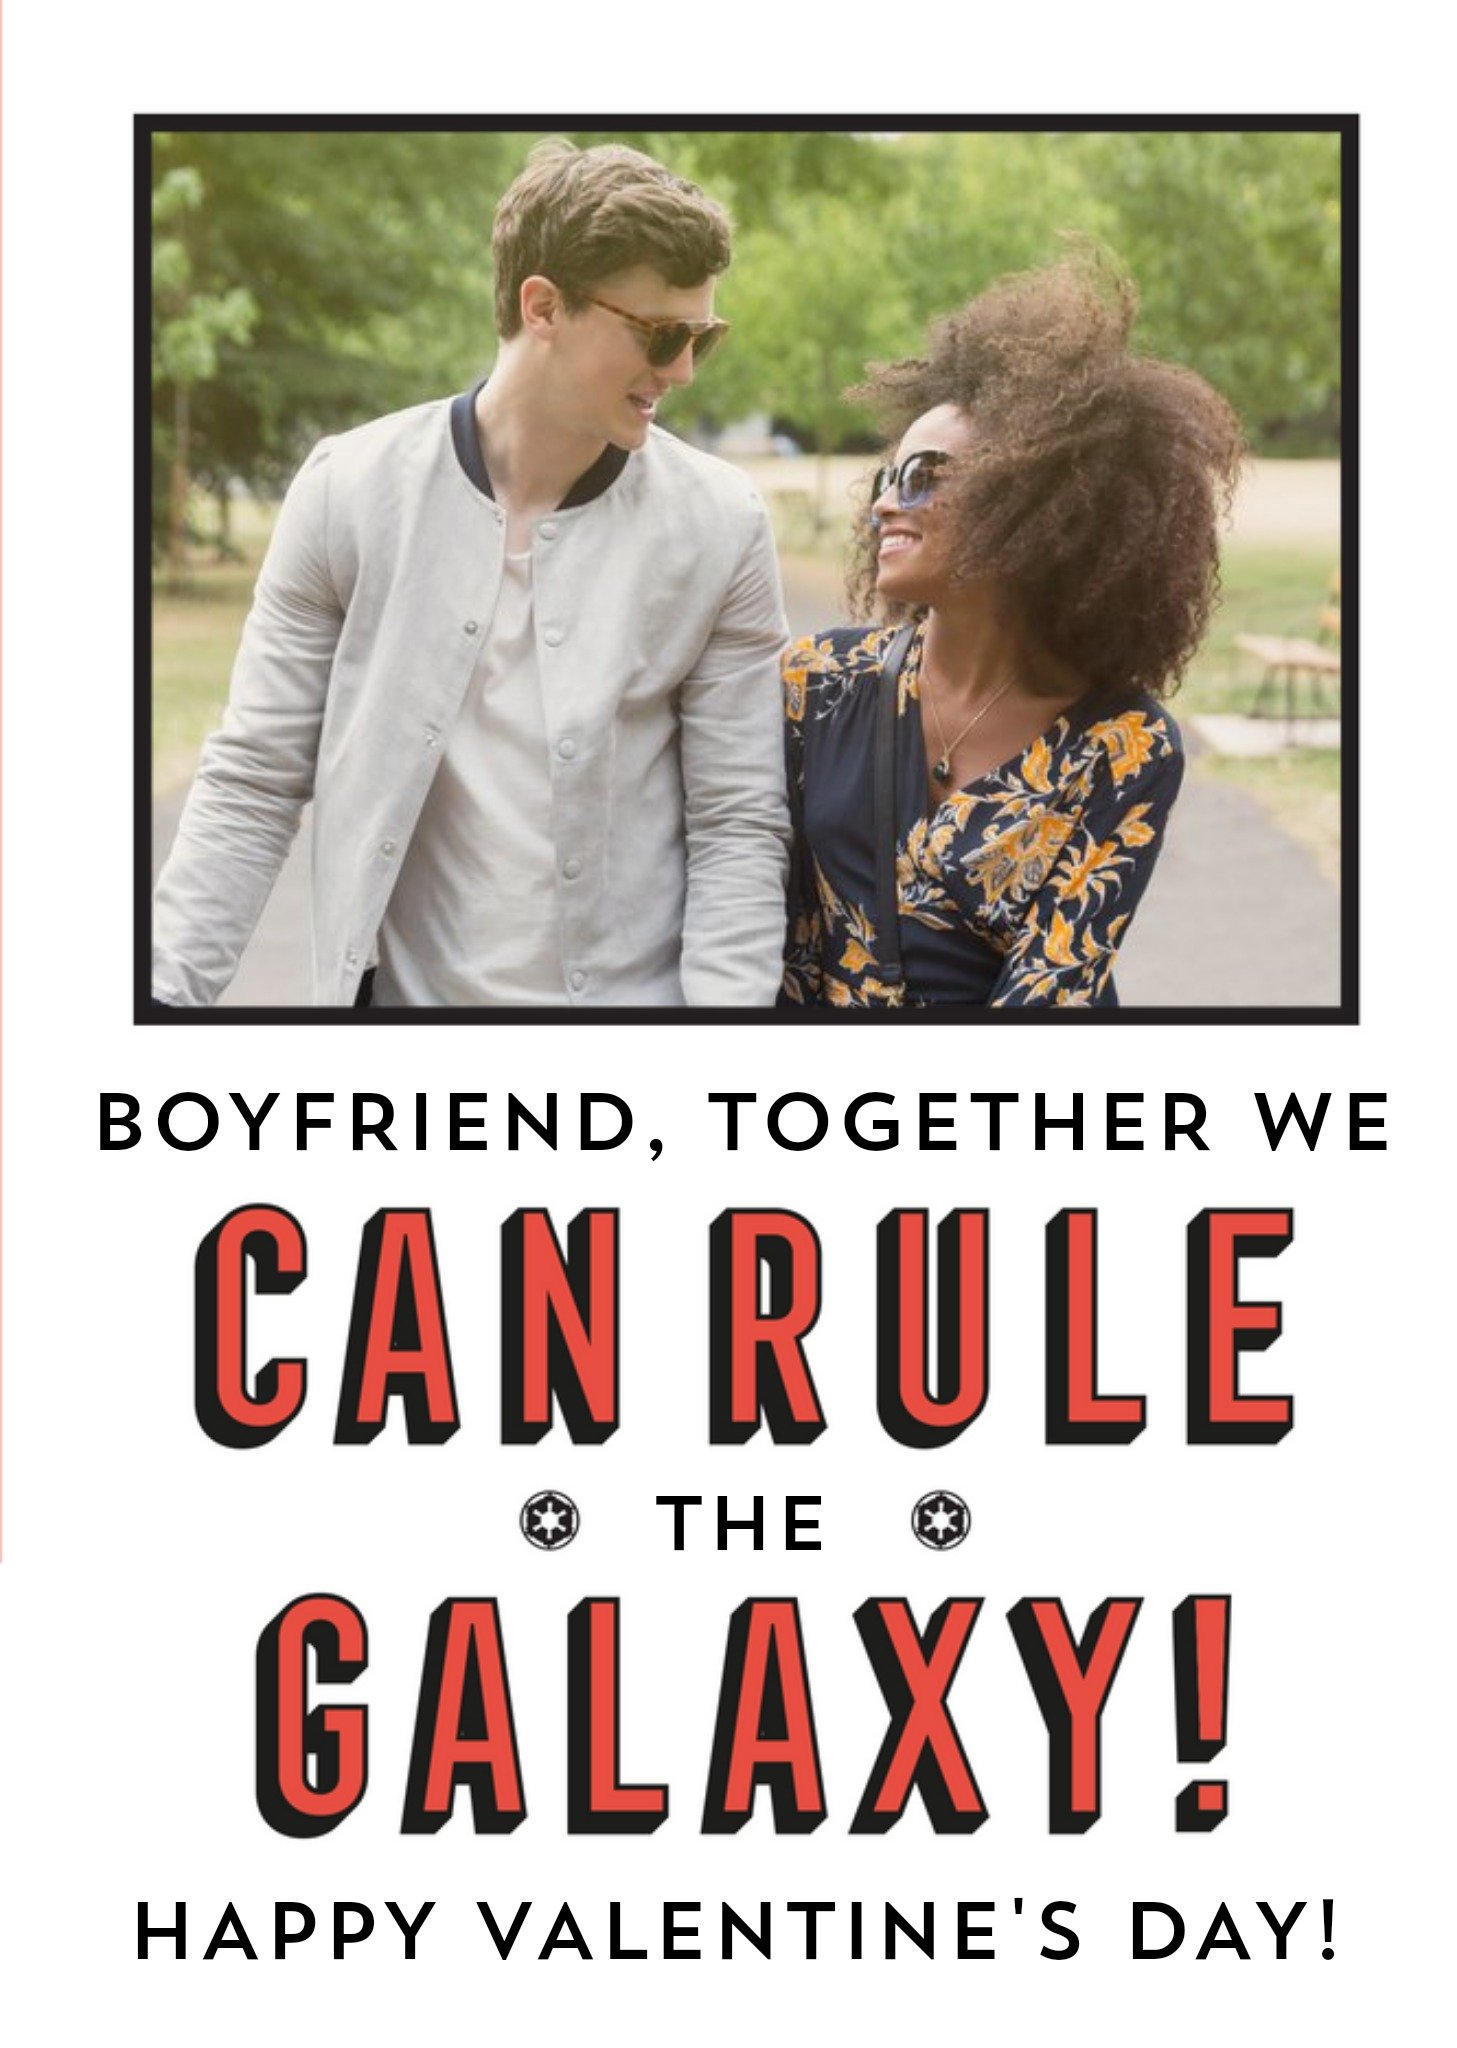 Disney Star Wars We Can Rule The Galaxy Boyfriend Valentine's Day Card, Large